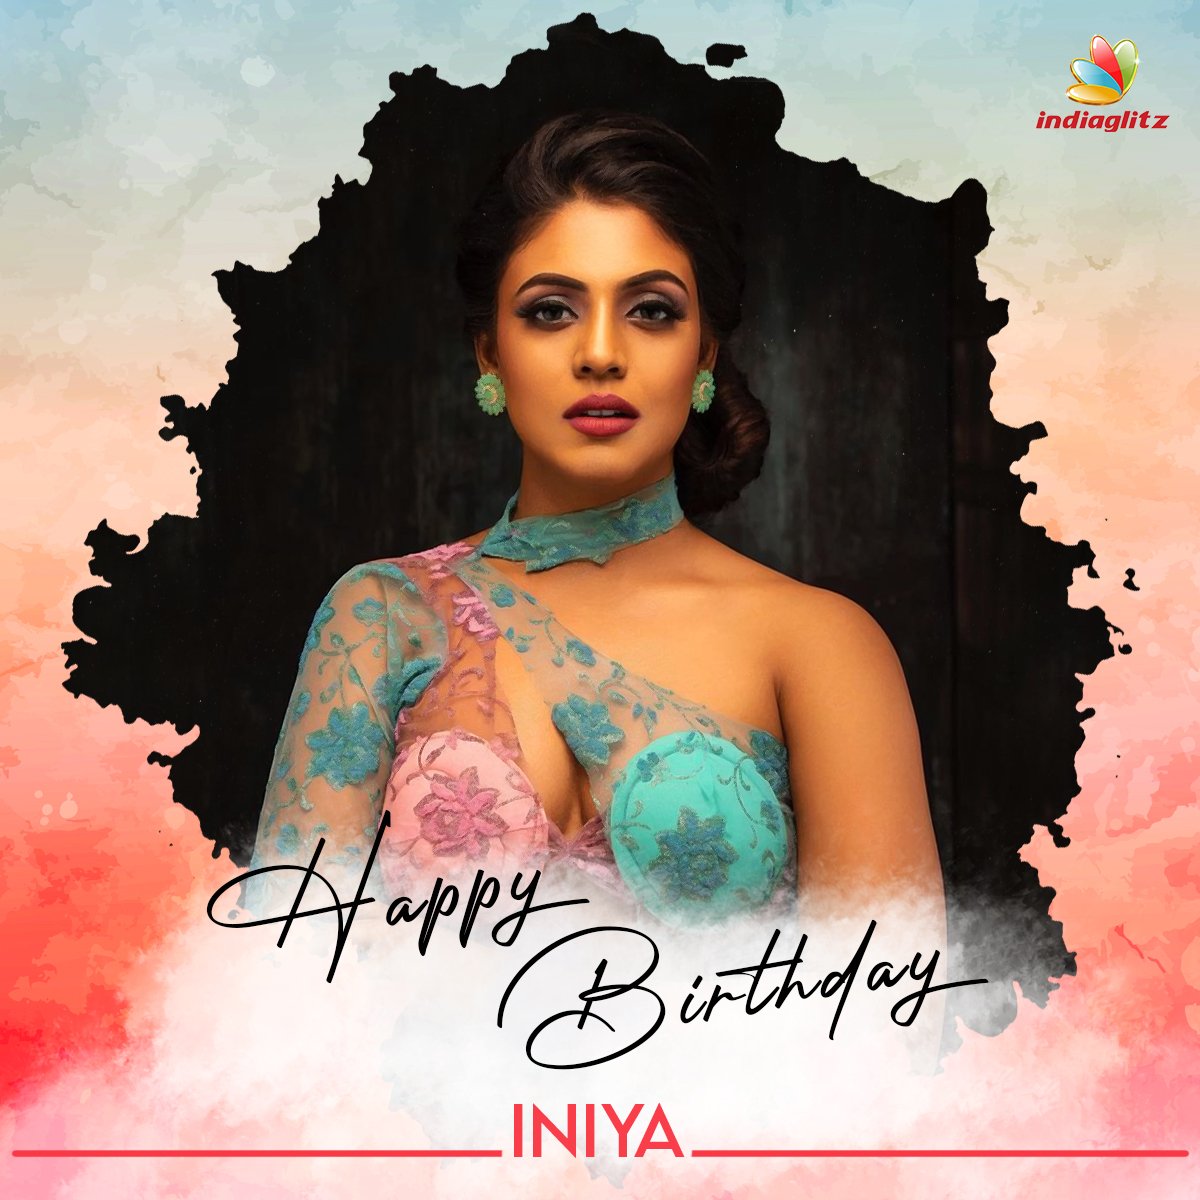 Wishing Actress Ineya a Very Happy Birthday 🥳

#HappyBirthdayIneya #HBDIneya